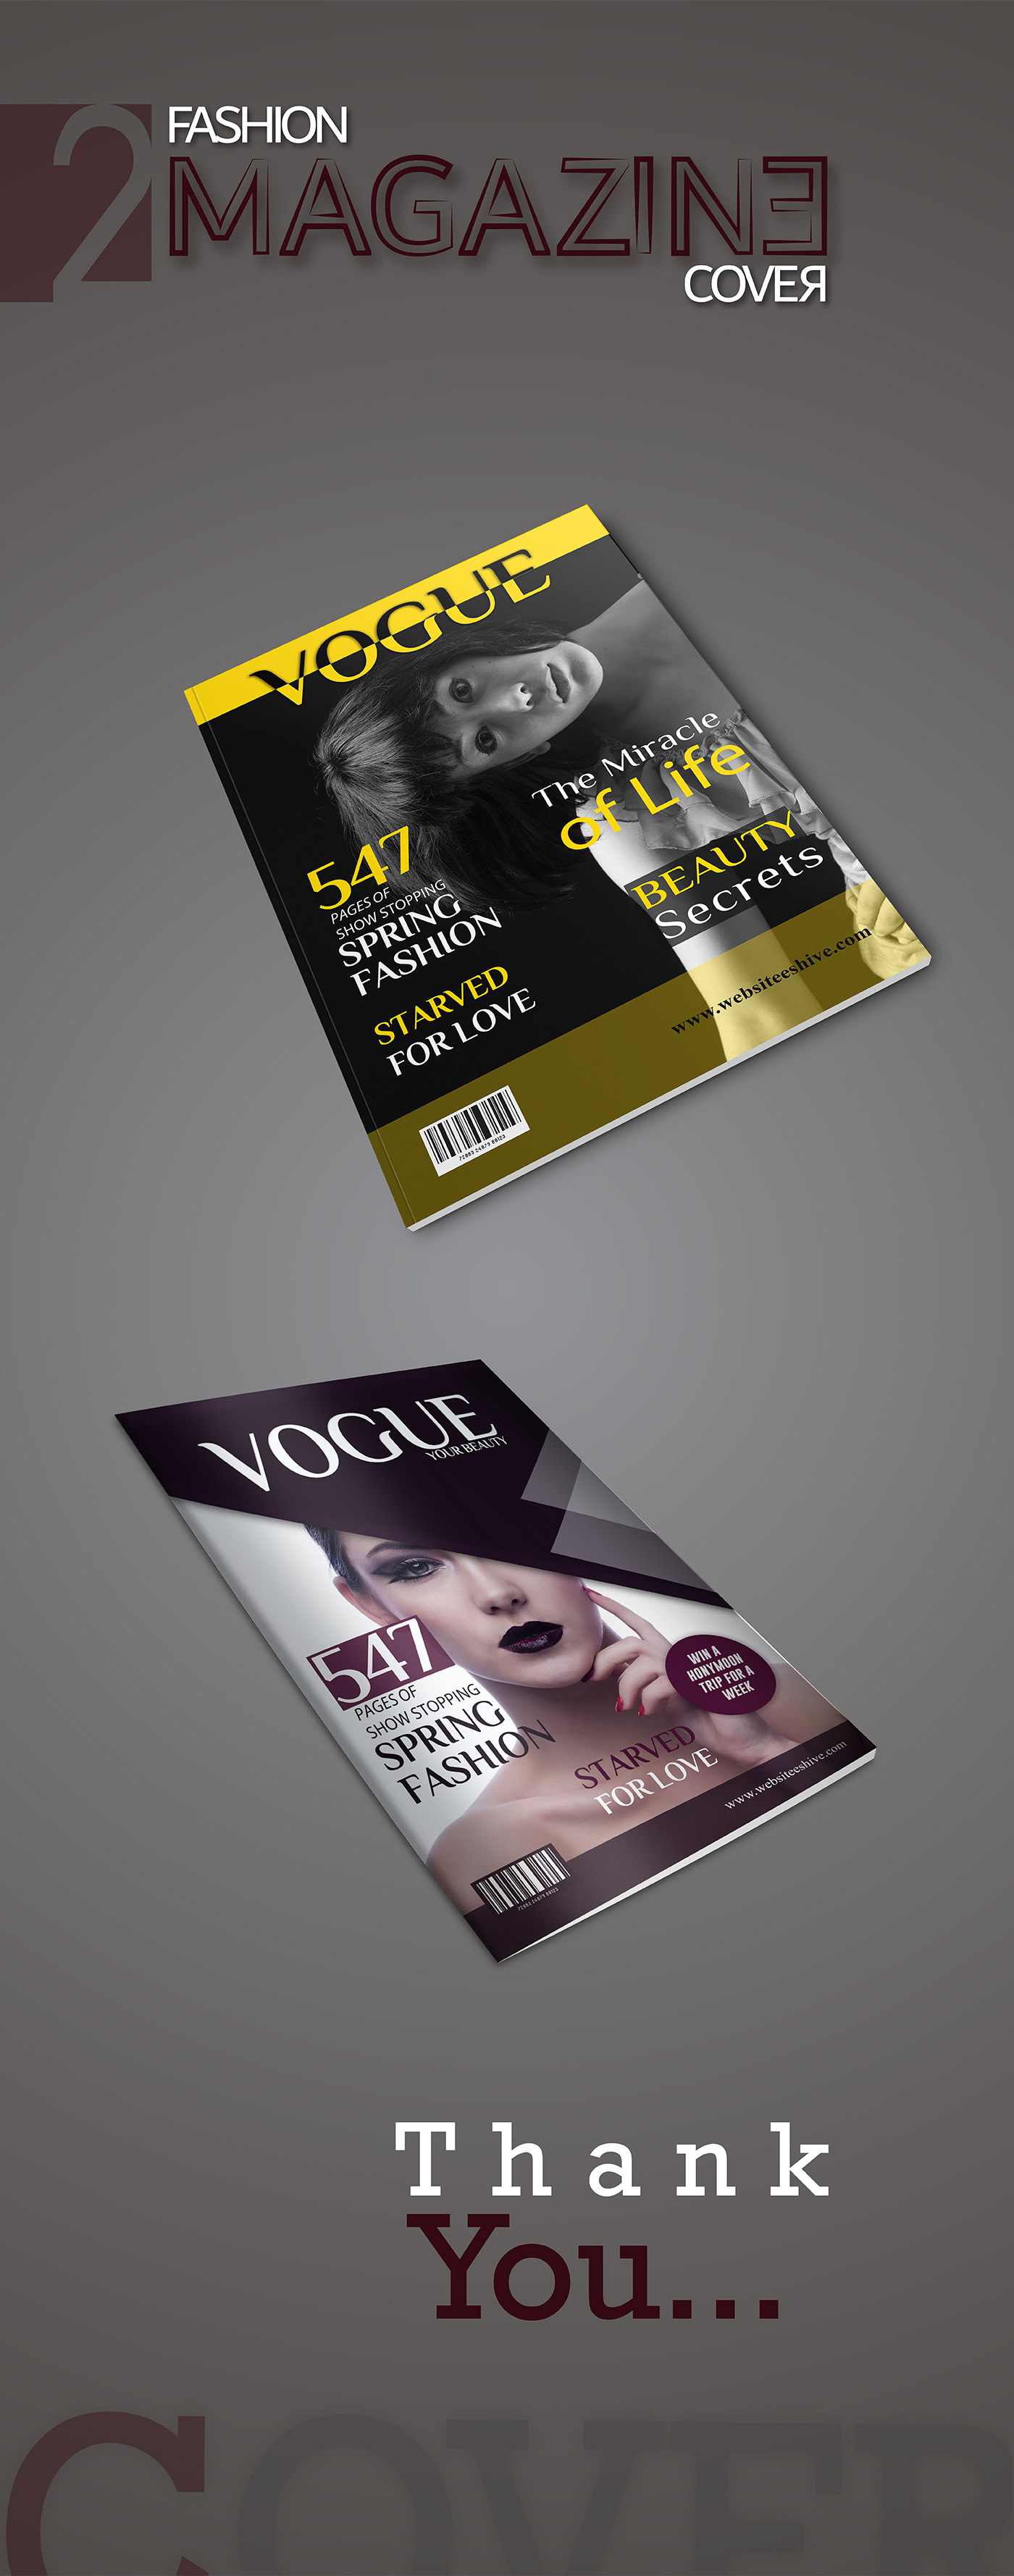 covers Fashion  Magazine Cover printings